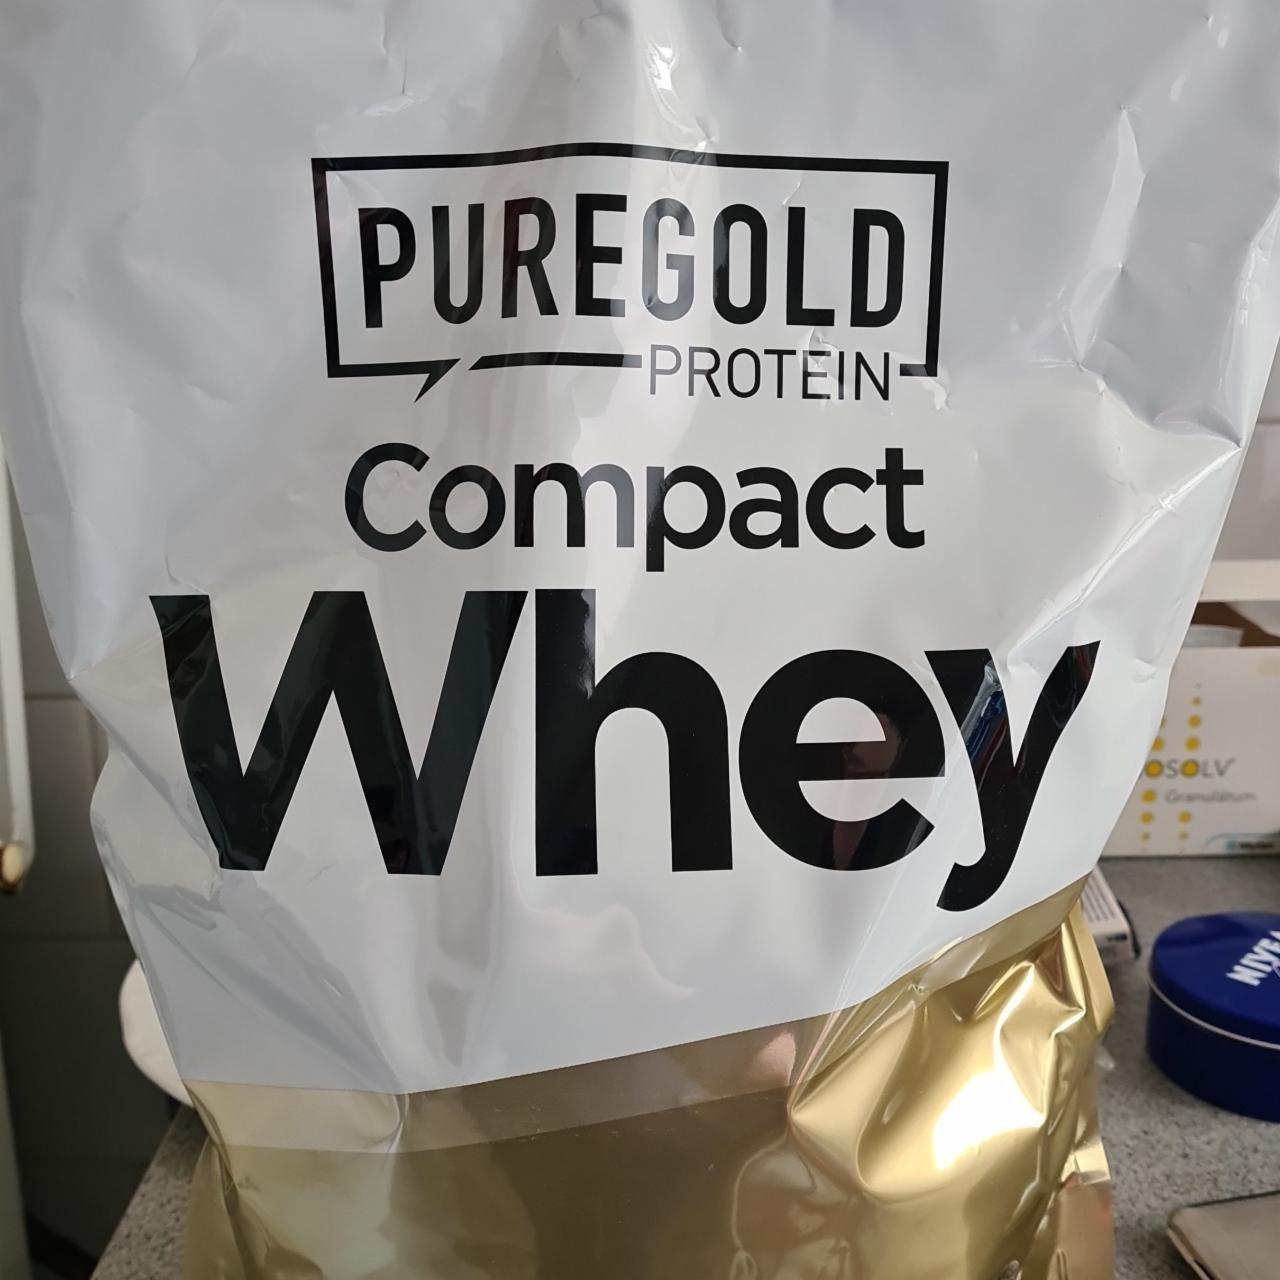 Képek - Compact whey protein vanília PureGold